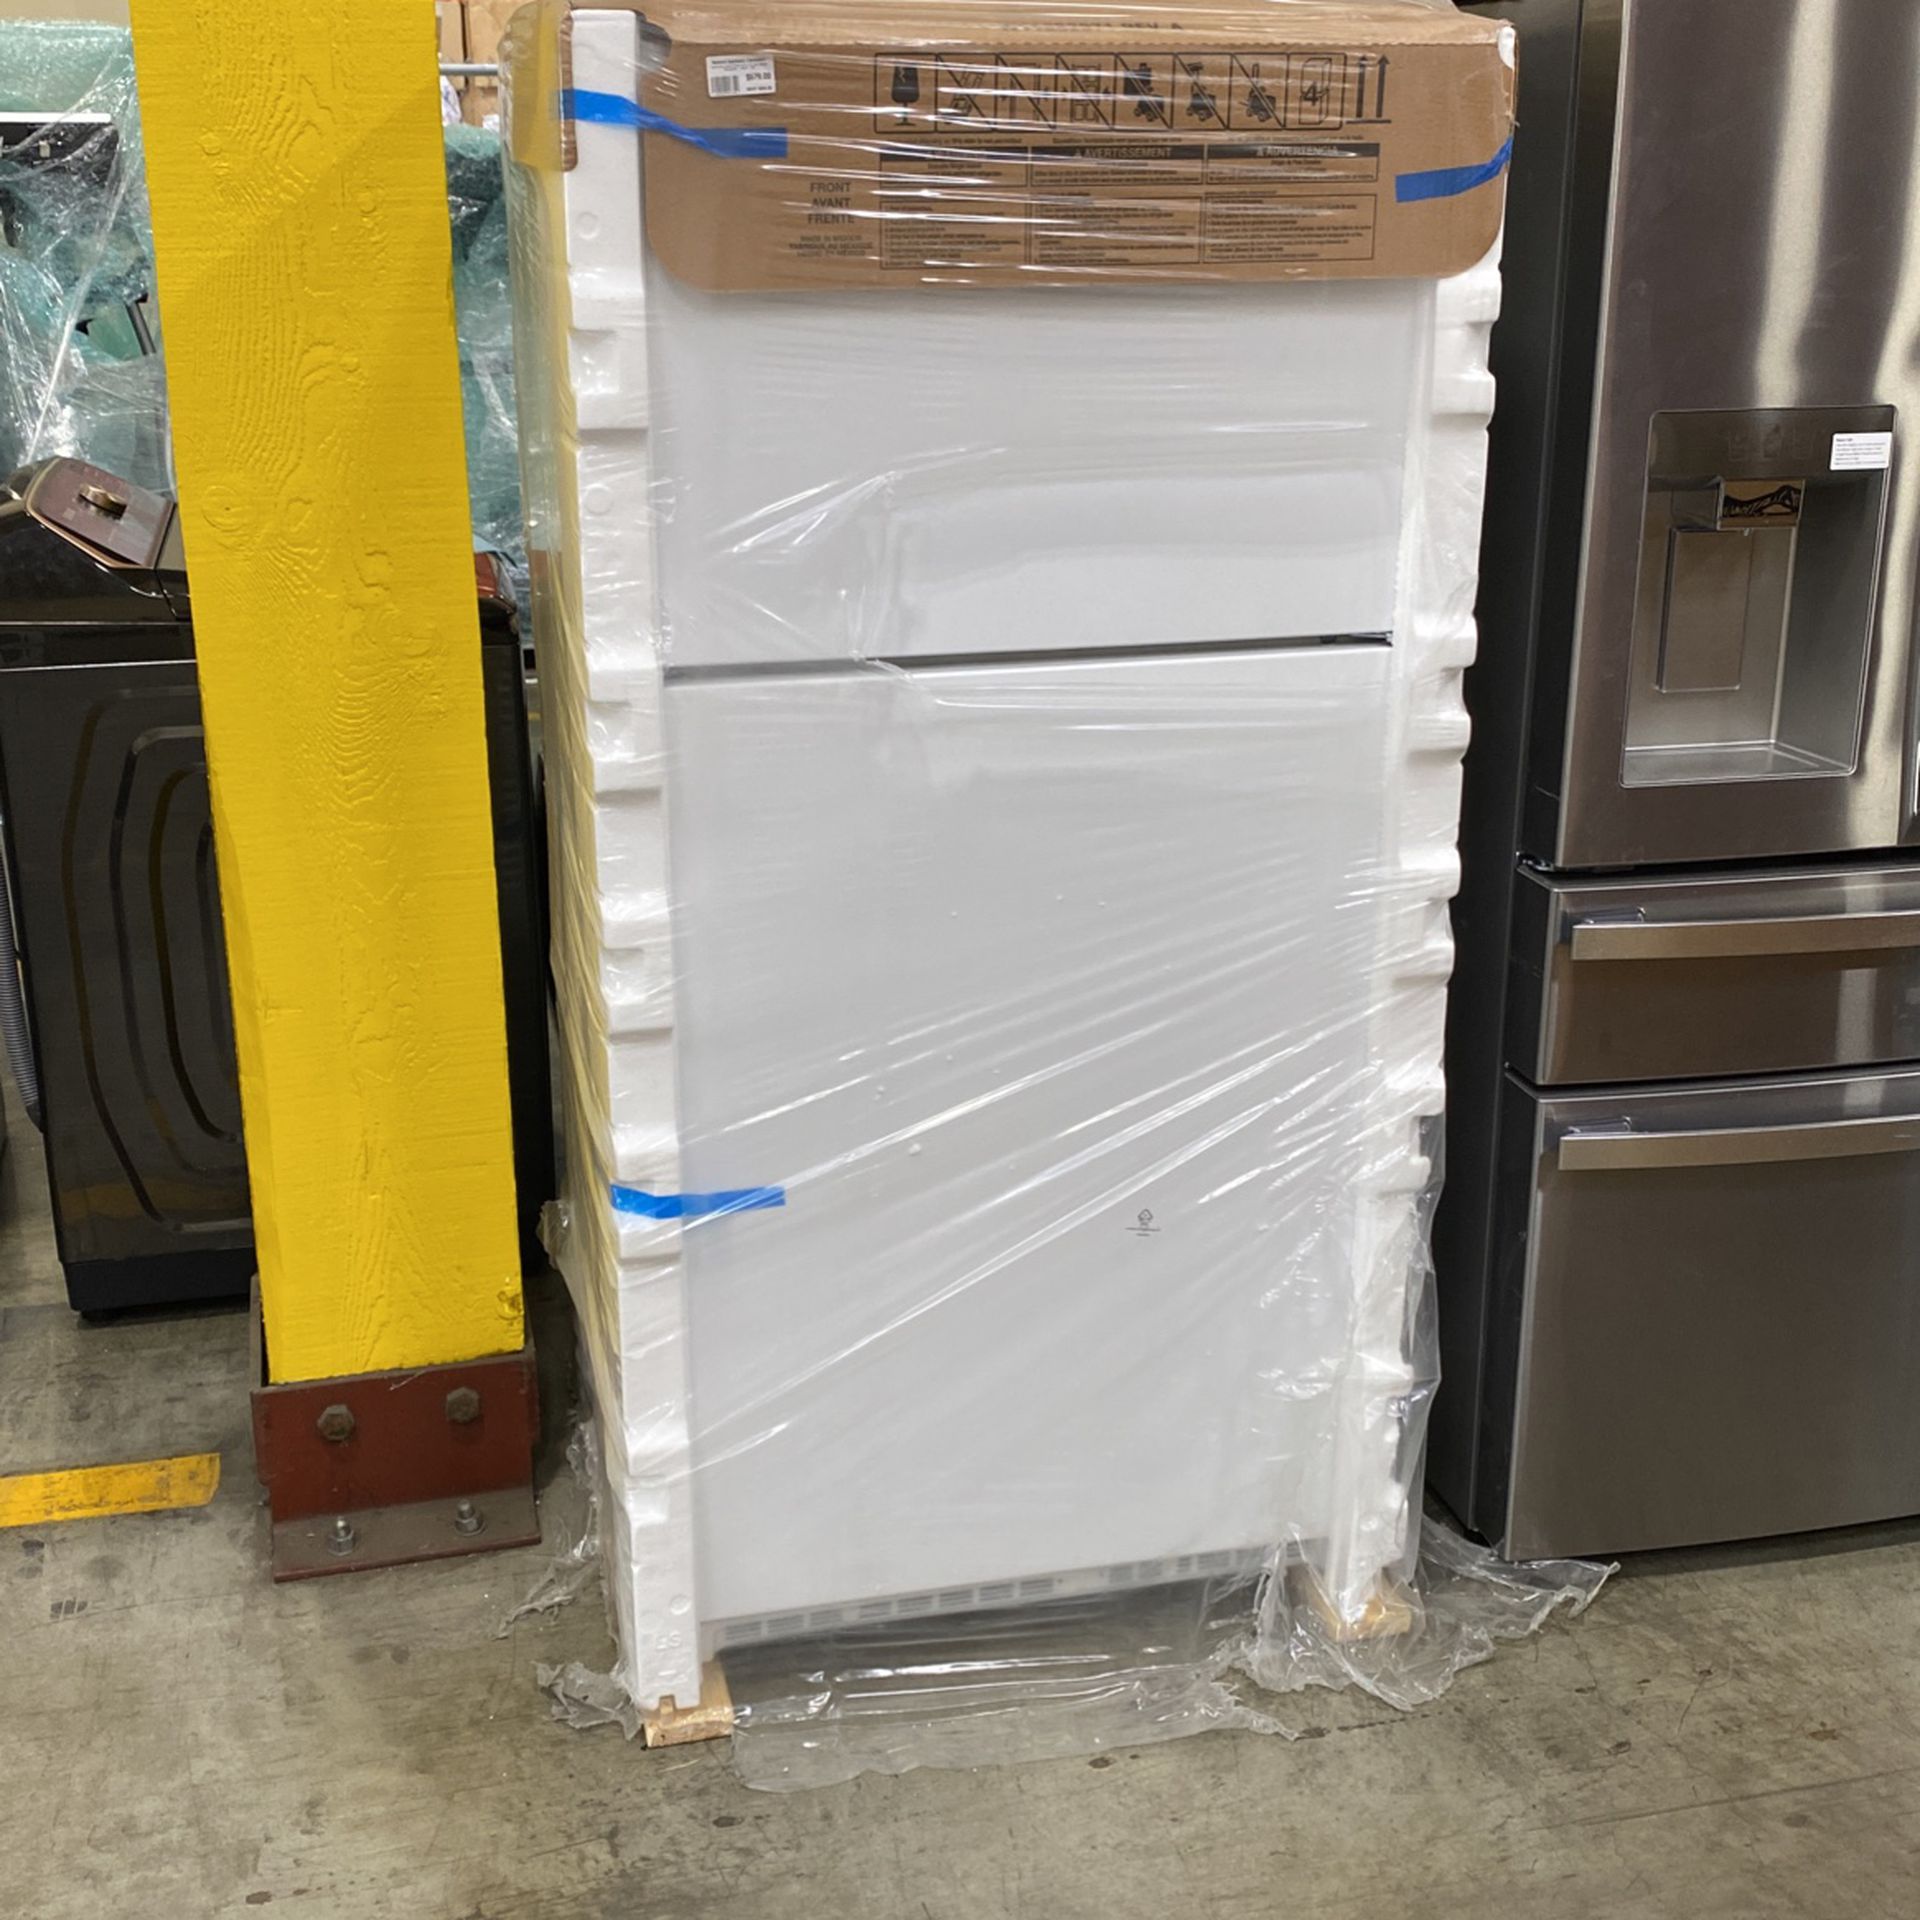 Whirlpool Top Freezer Refrigerator (new in box)